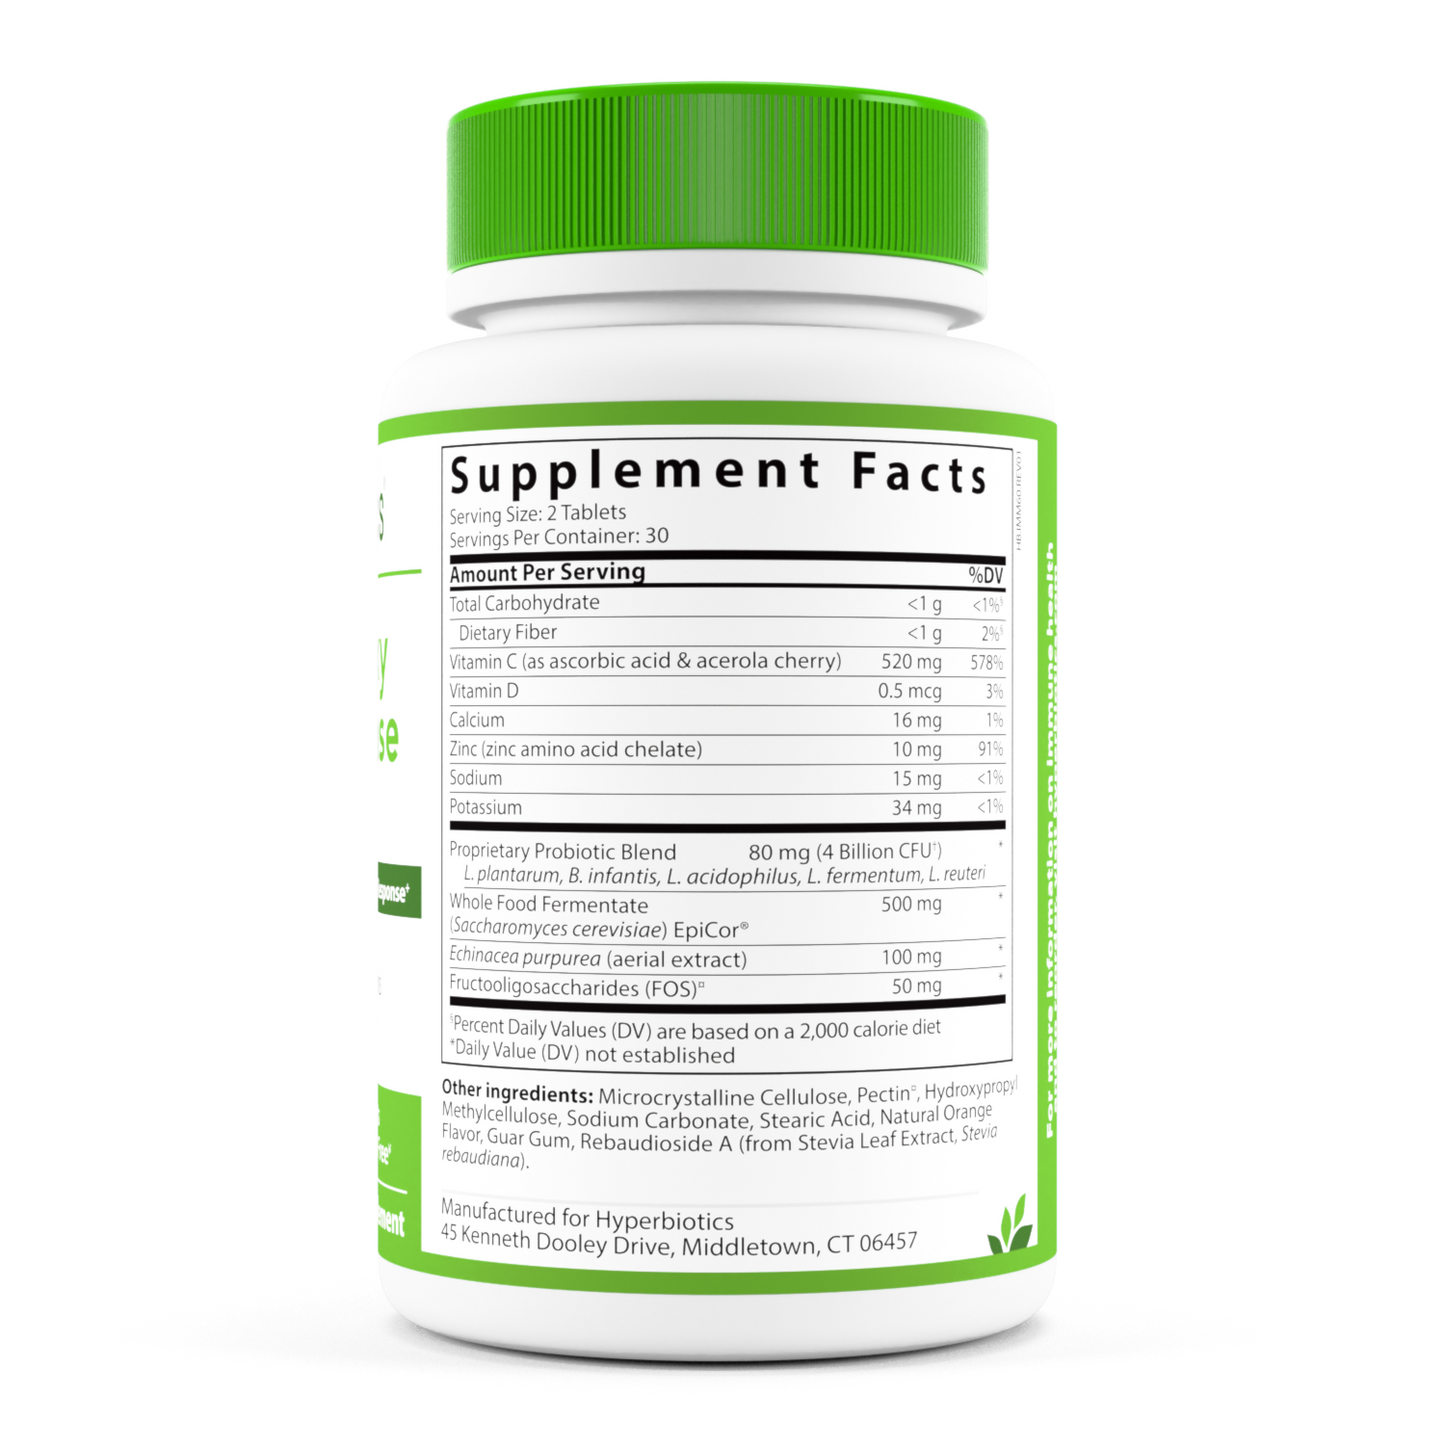 Hyperbiotics PRO-Leaky Gut Defense Supplement Facts on bottle.